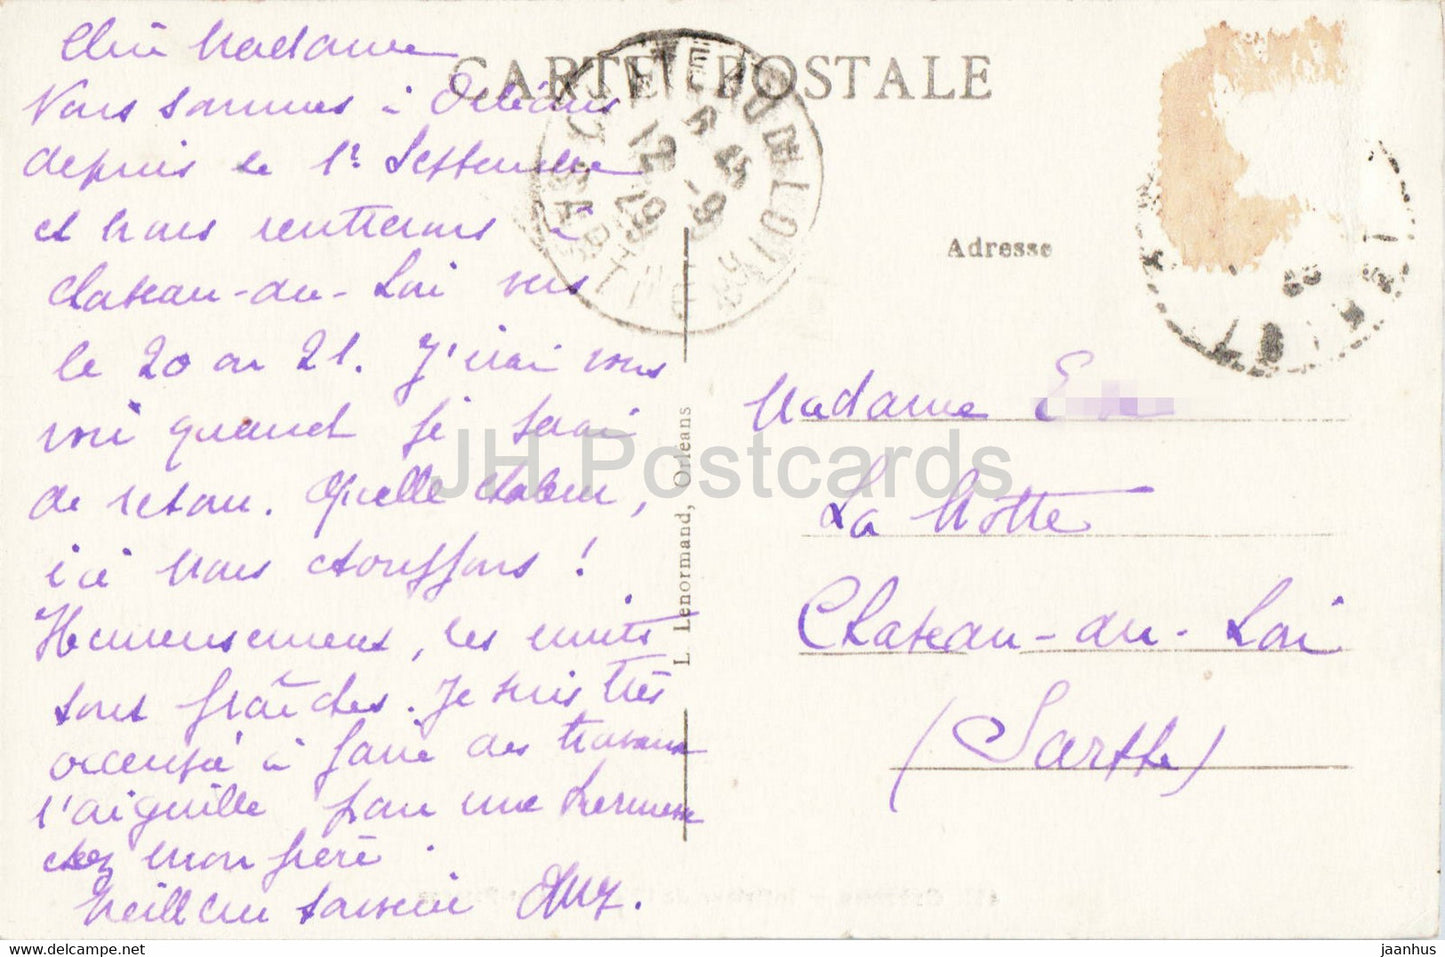 Orleans - Interieur de l'Eglise Saint Paterne - Kirche - 417 - alte Postkarte - 1929 - Frankreich - gebraucht